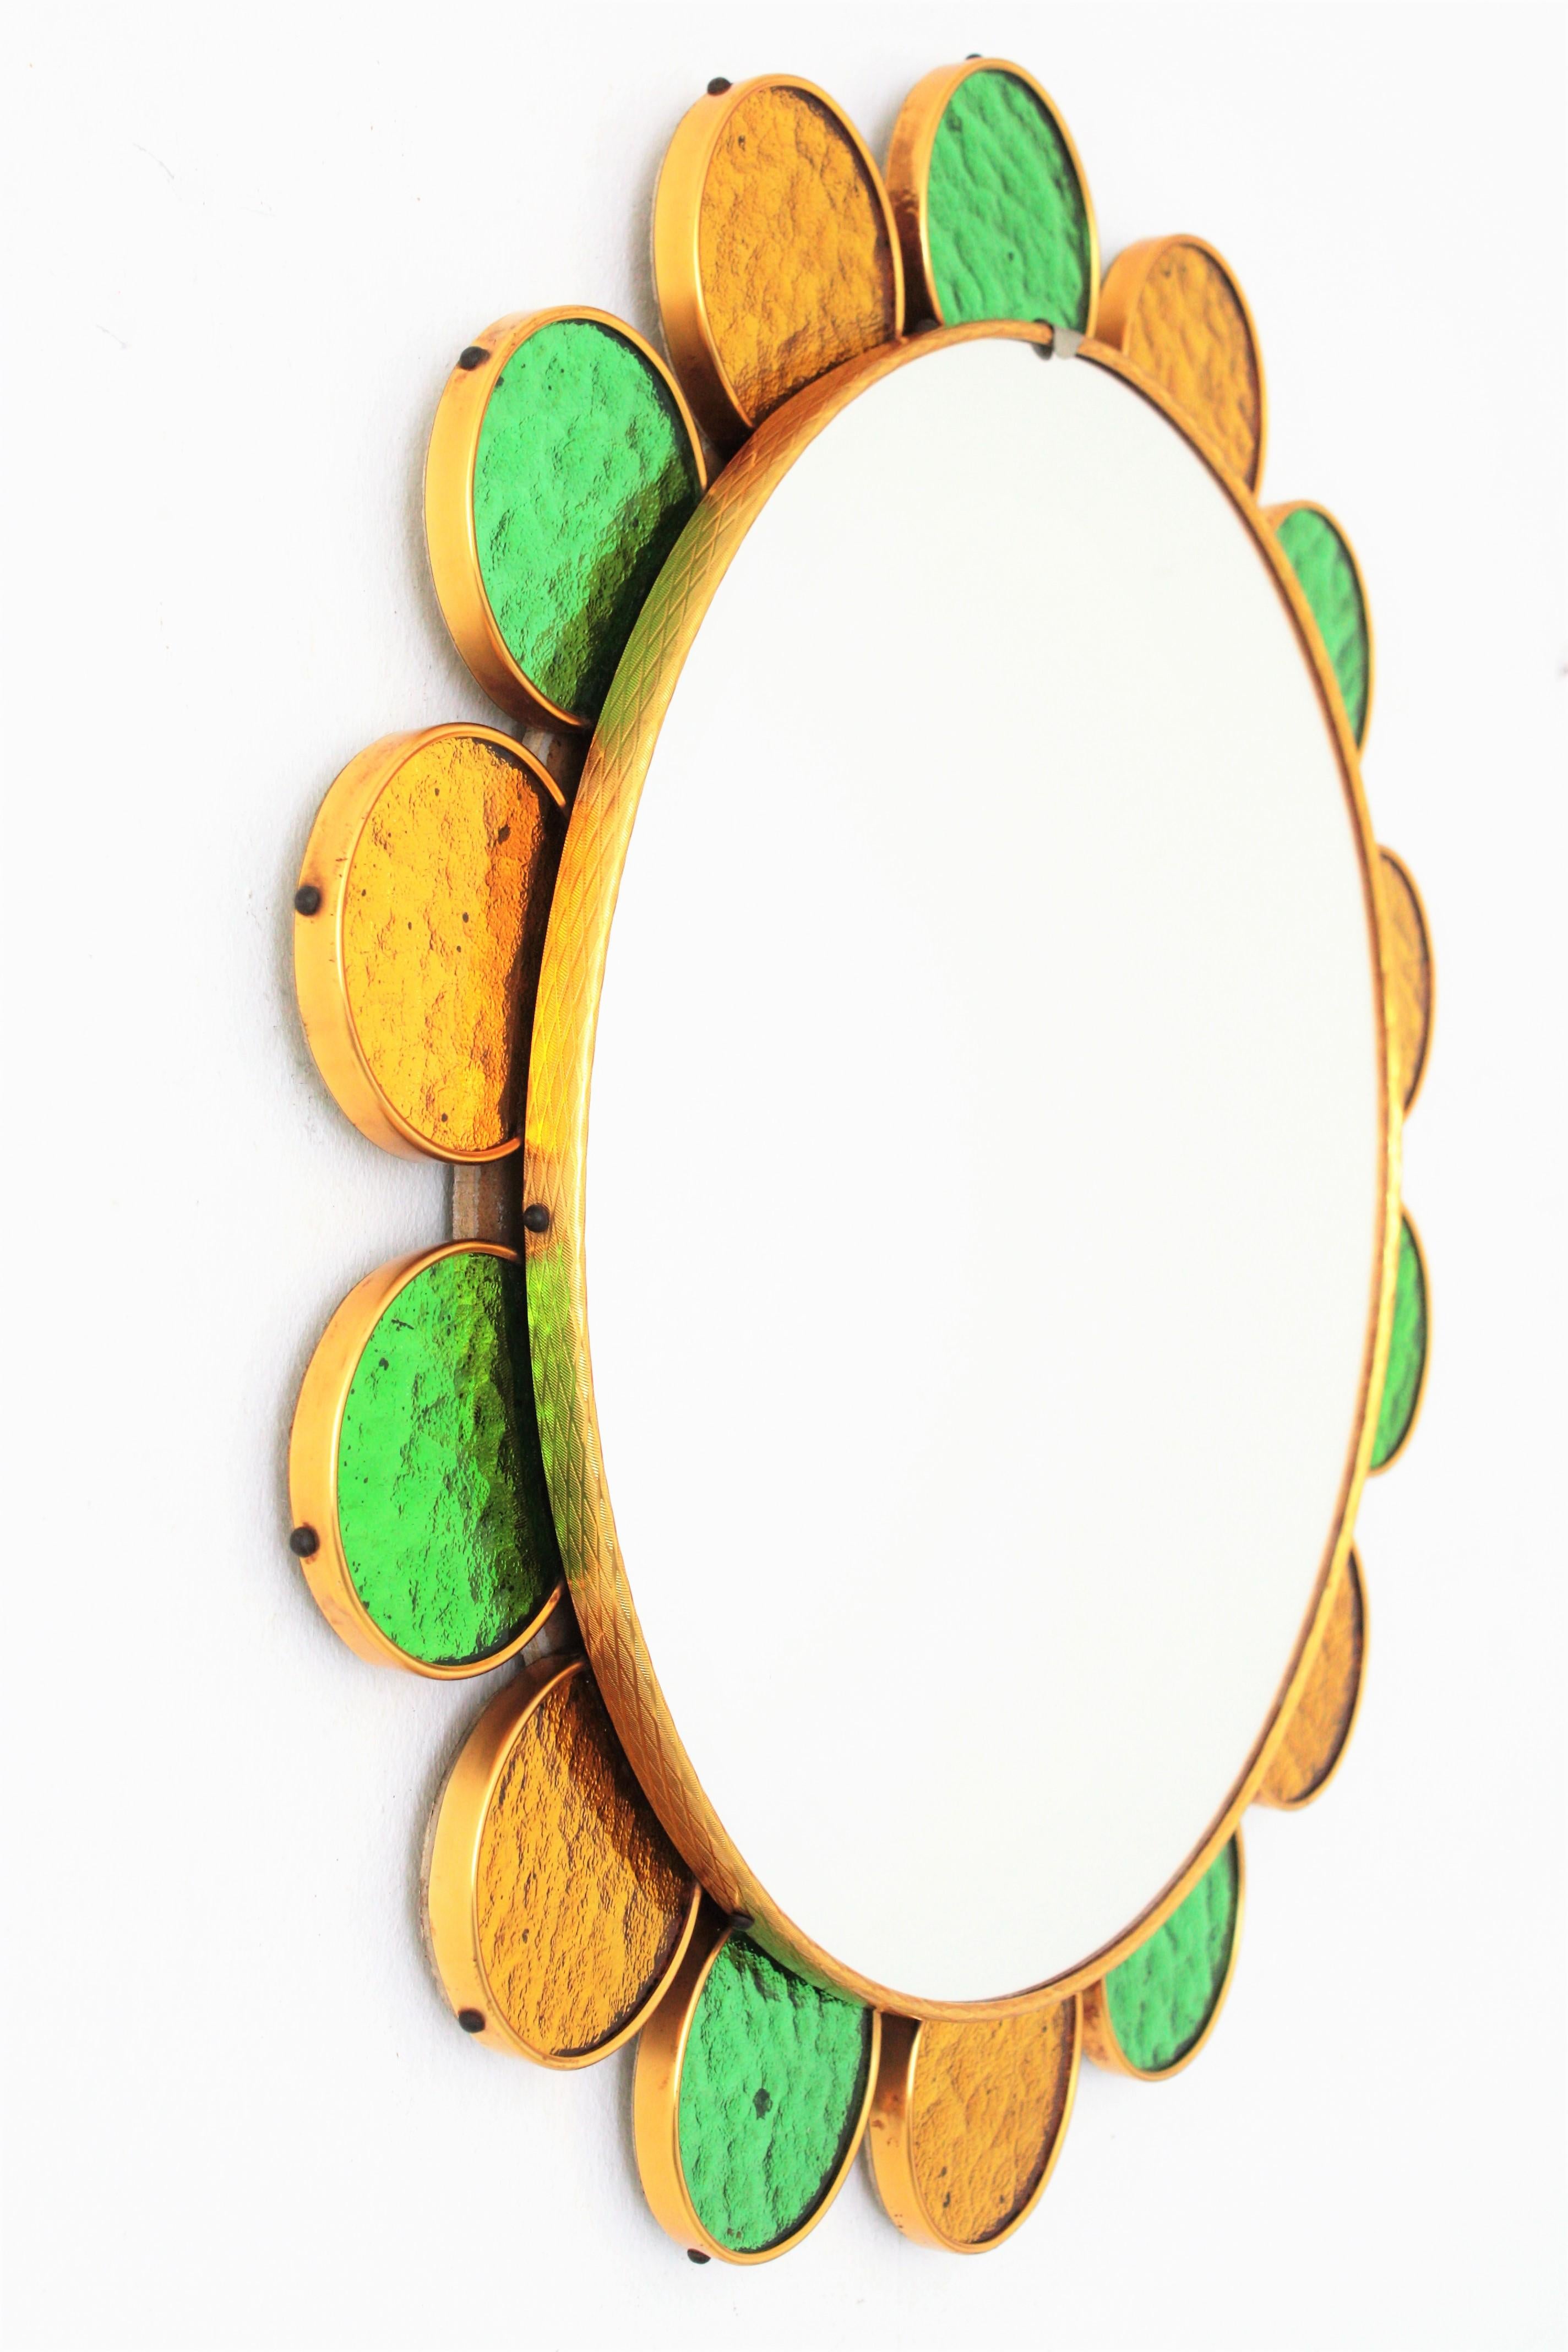 20th Century Spanish Flower Sunburst Mirror, Green and Golden Glass Petals Frame For Sale